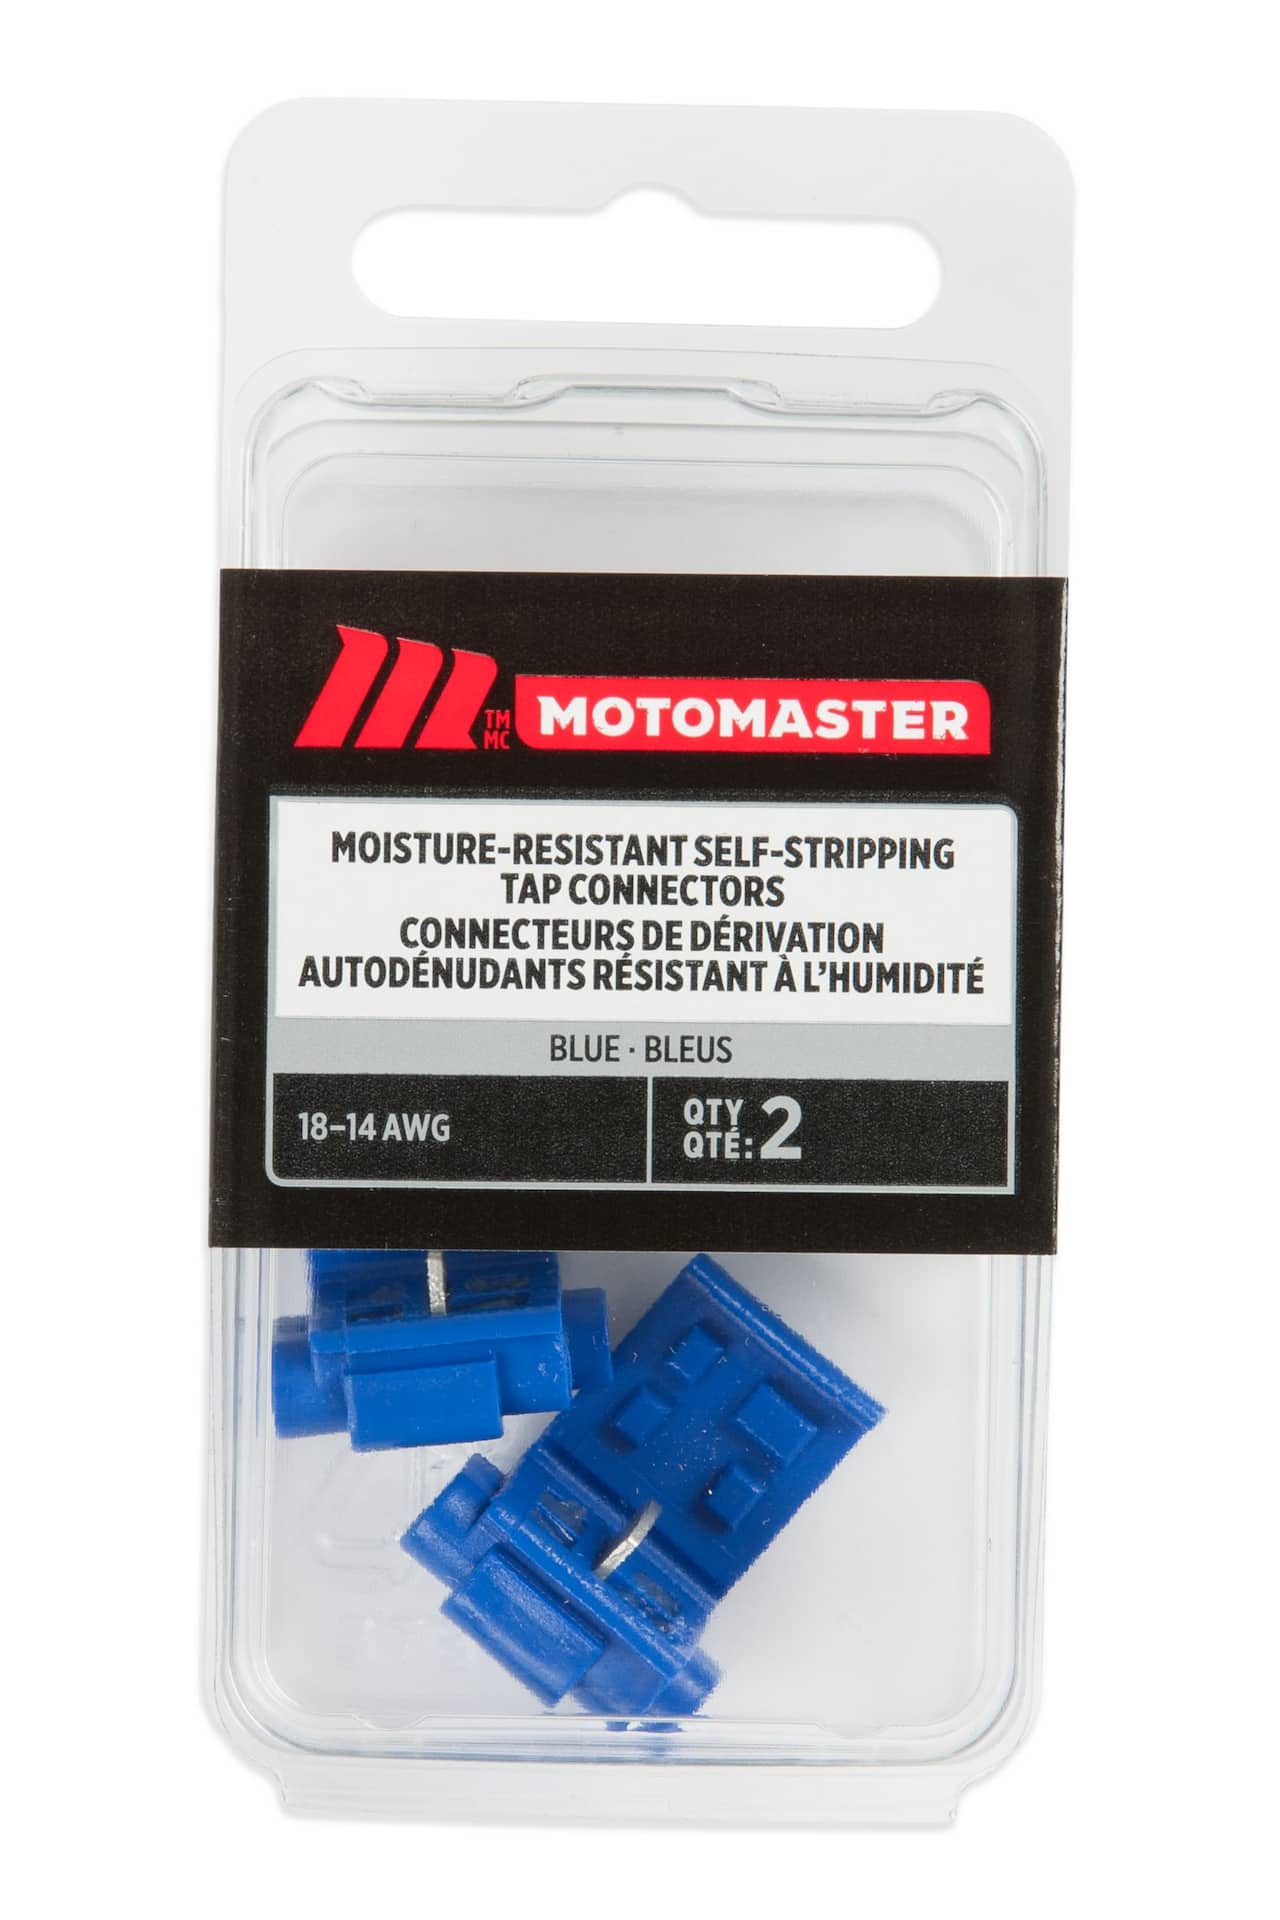 MotoMaster 18-16 Moisture Resistant Tap Connector, 2-pk